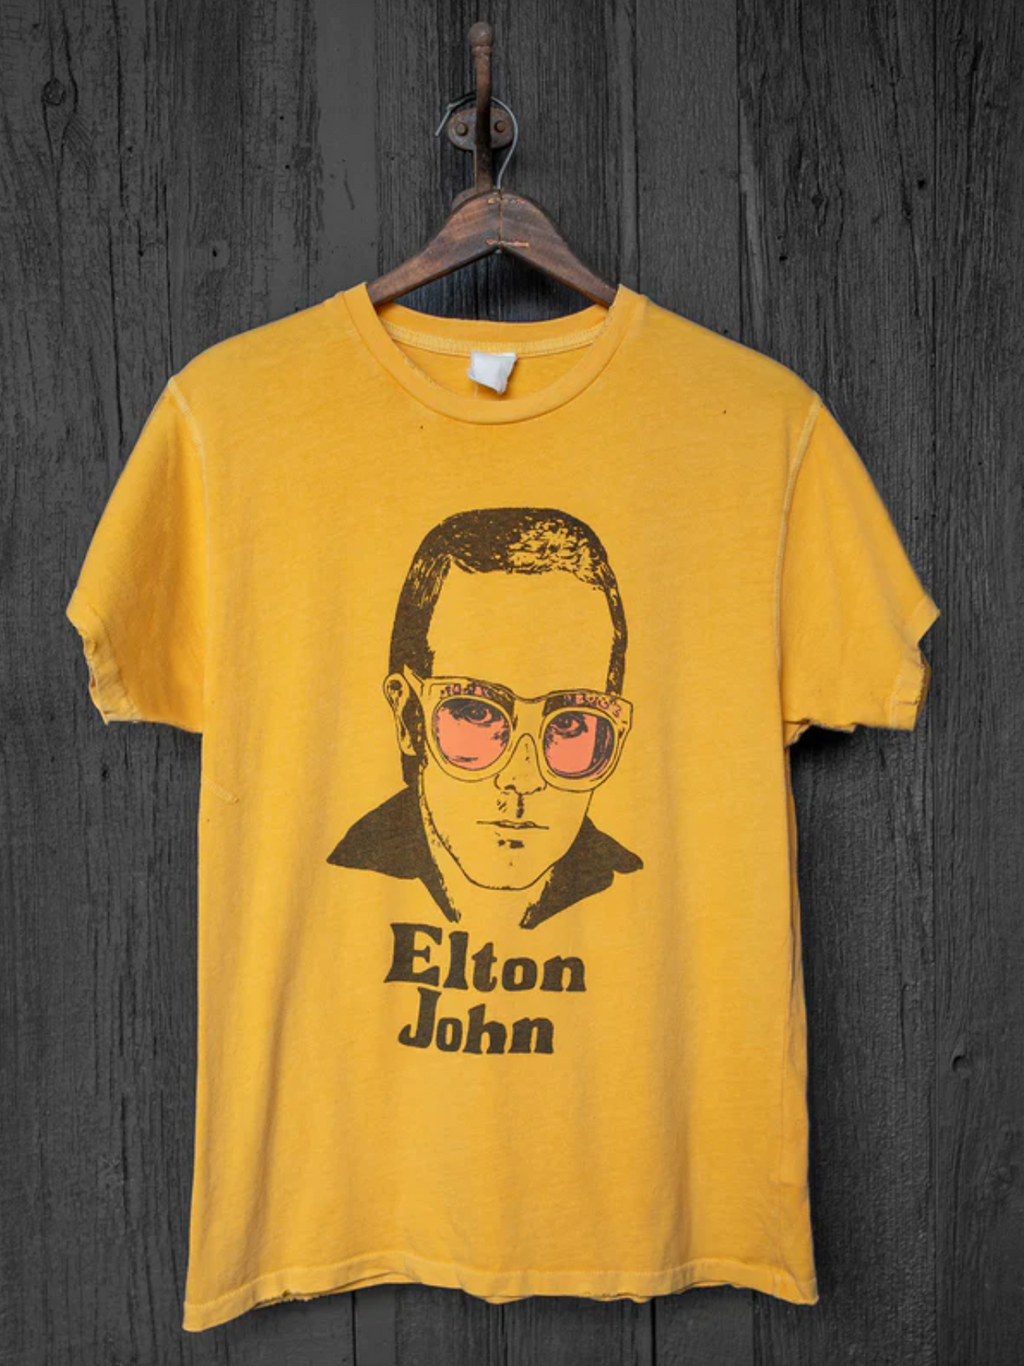 Elton John 90s Fit Crewneck Tee